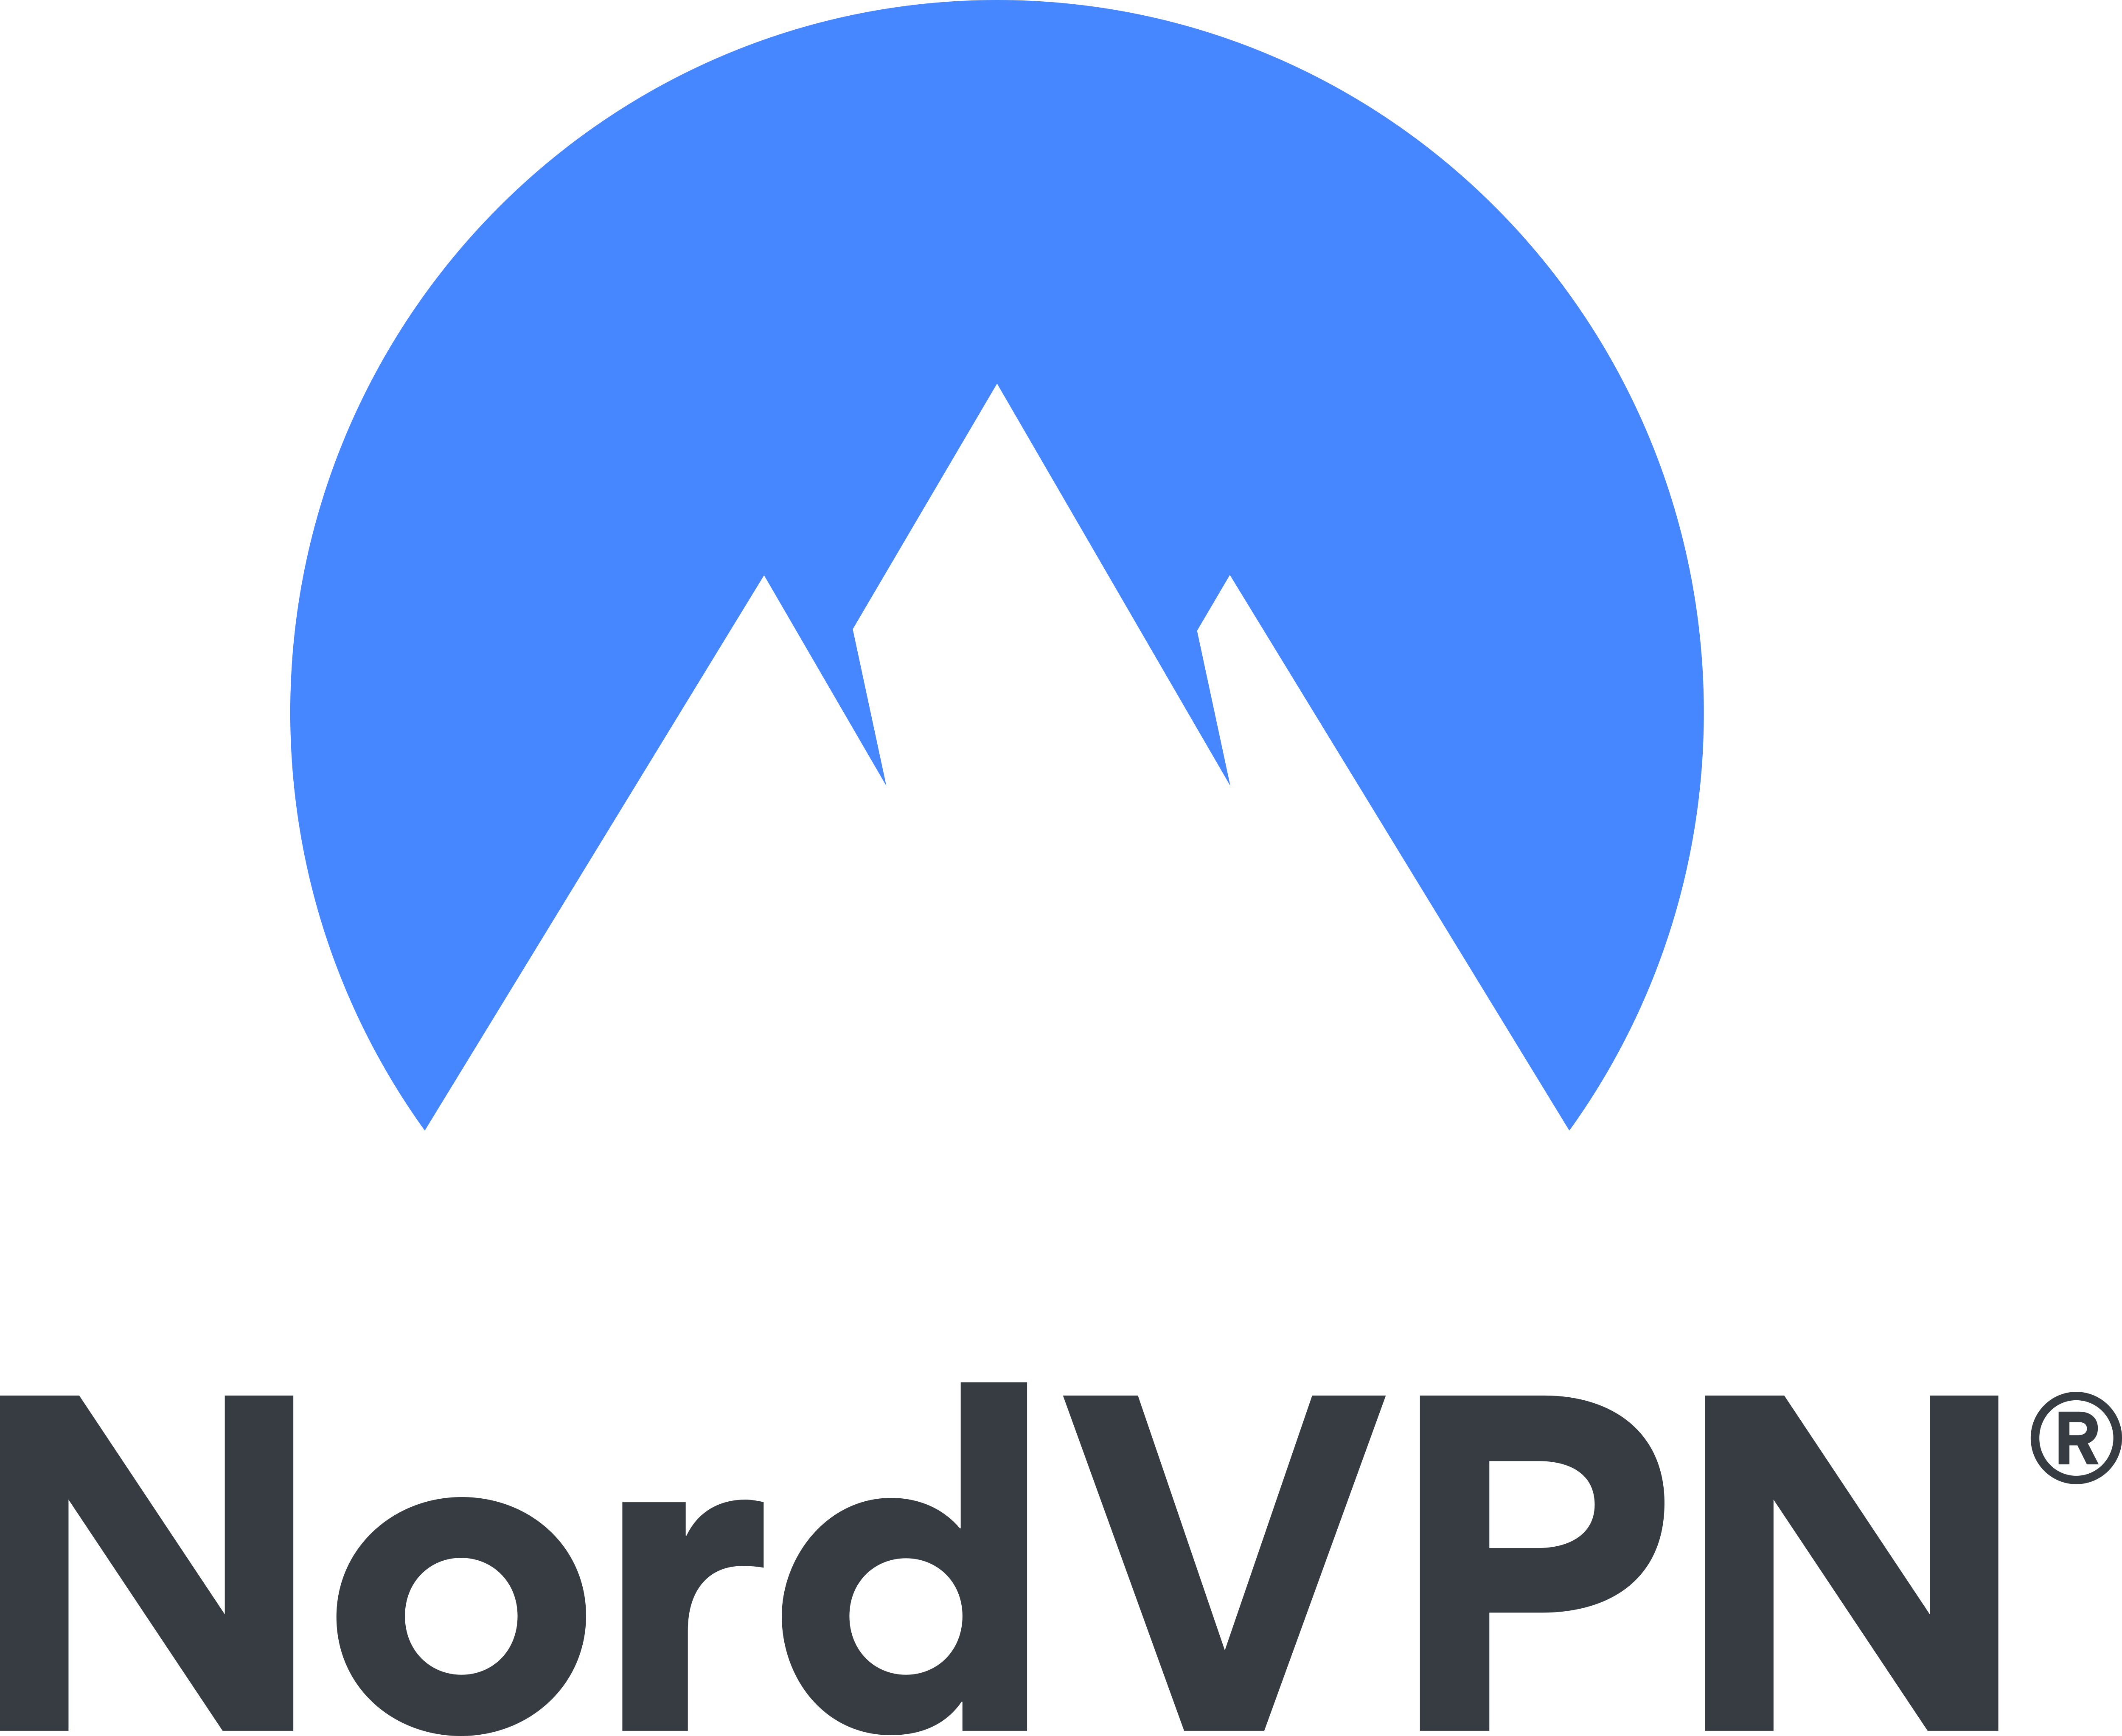 www.nordvpn/download